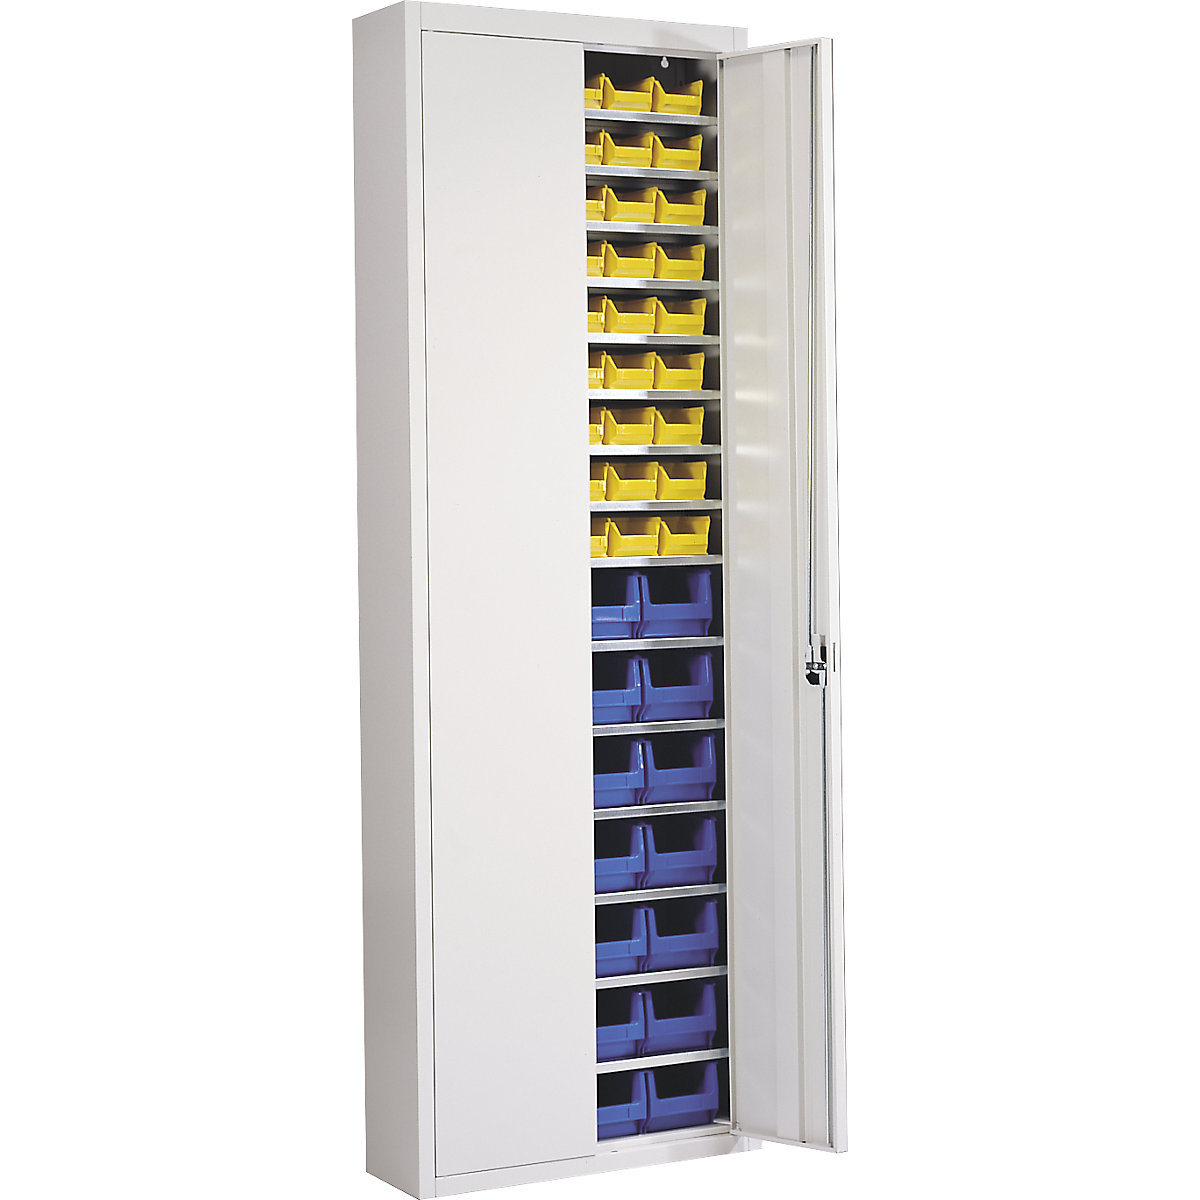 Storage cupboard with open fronted storage bins – mauser, HxWxD 2150 x 680 x 280 mm, single colour, grey, 82 bins-12